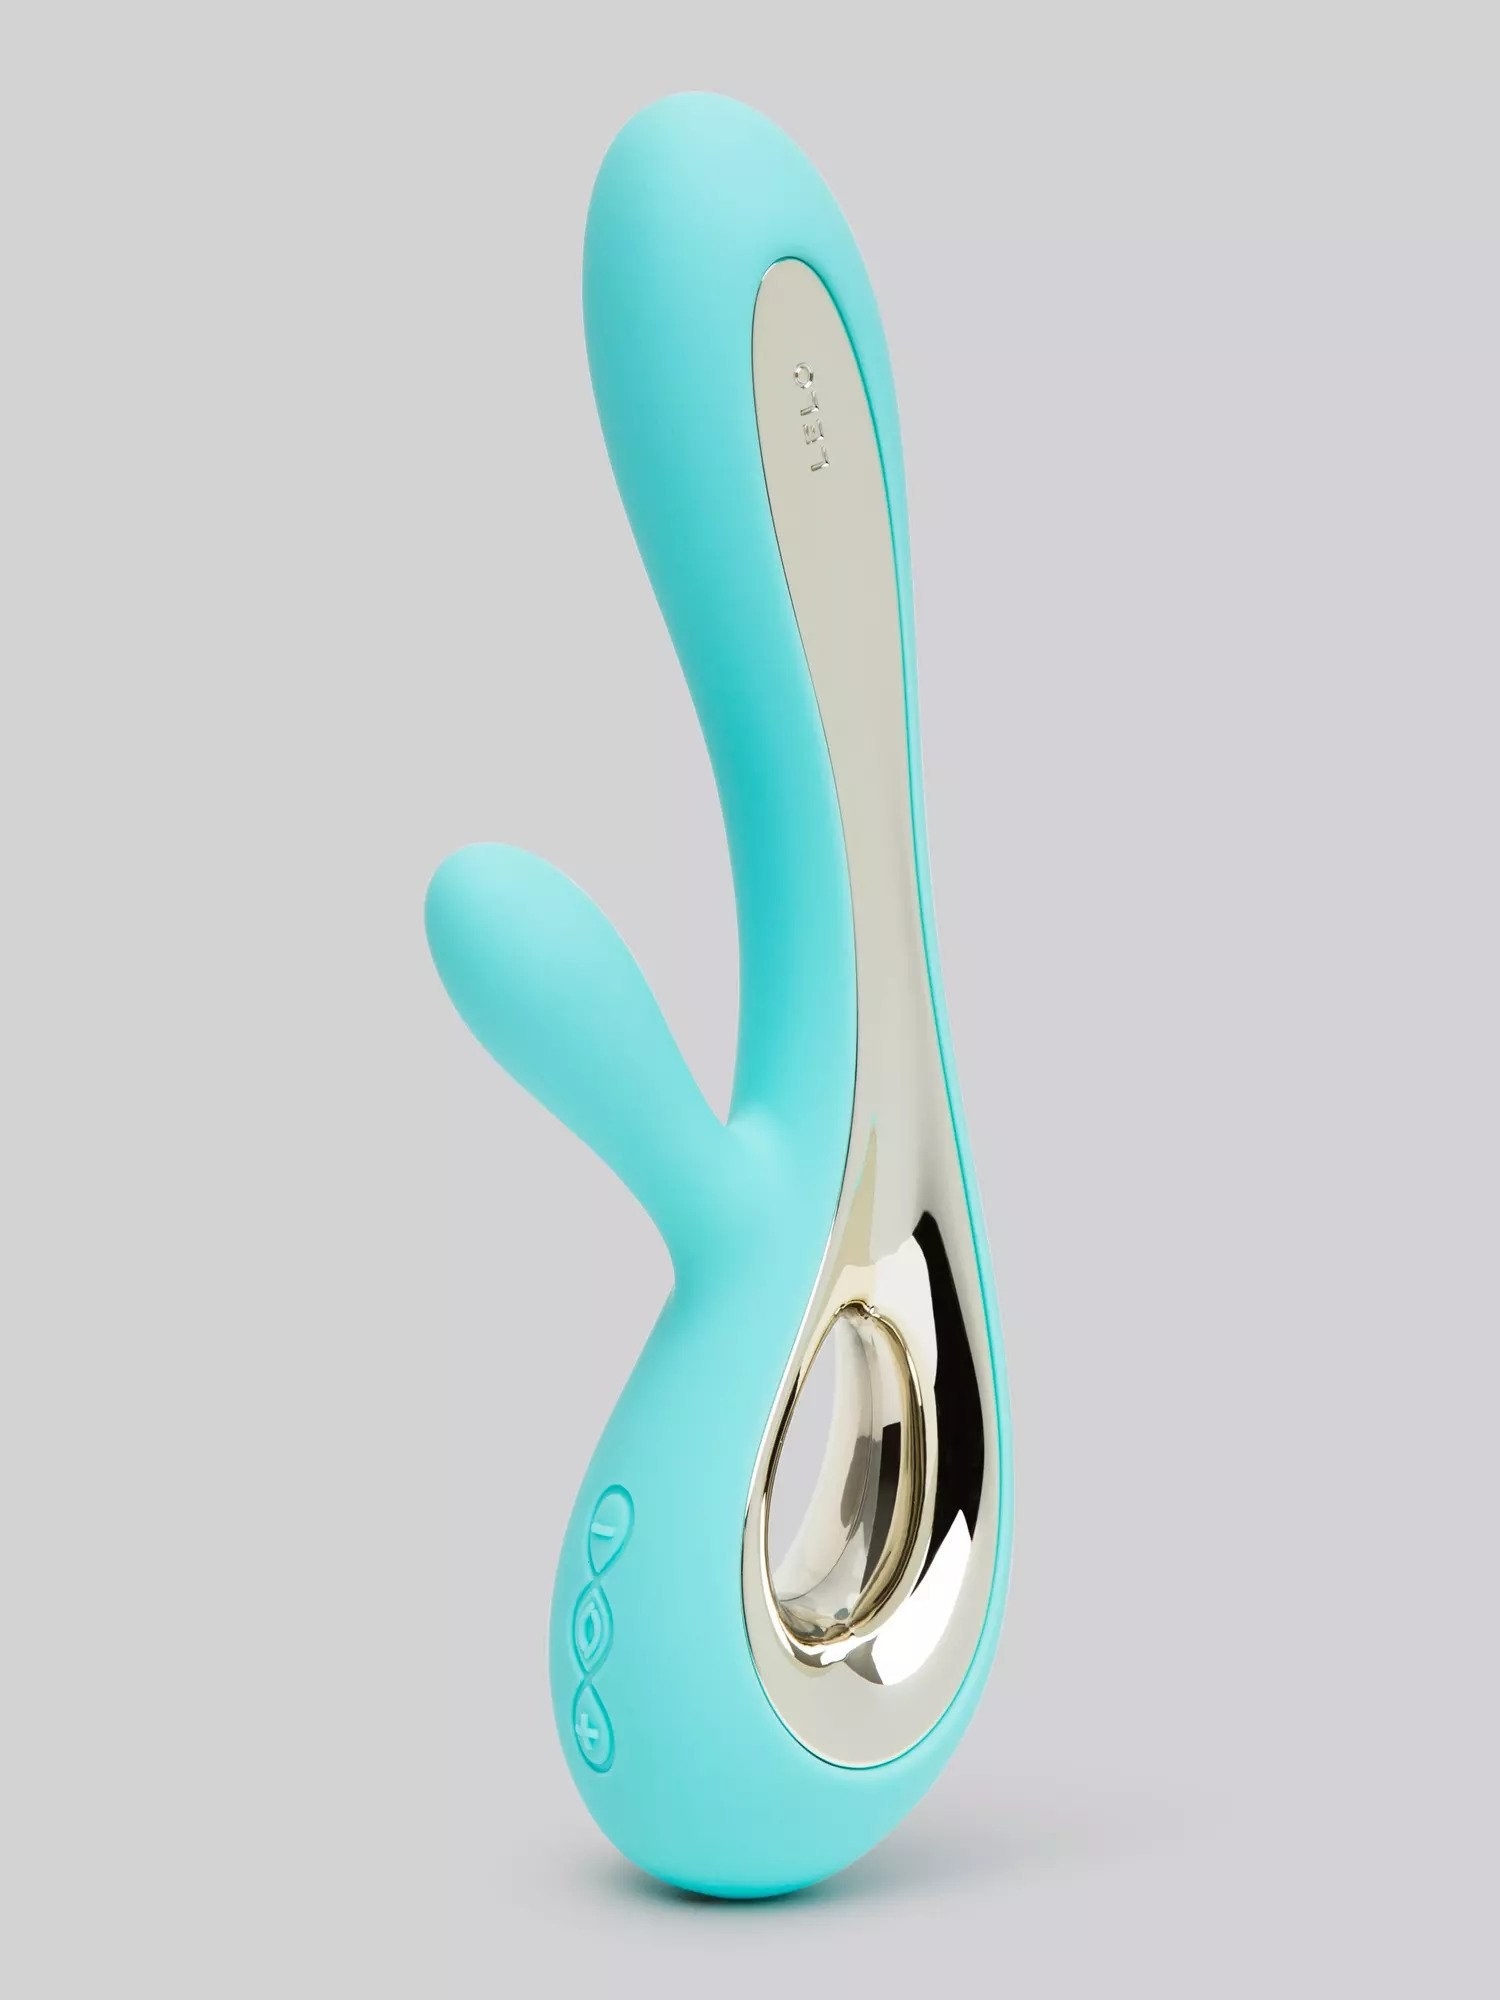 Aqua vibrator with goldtone accents on handle